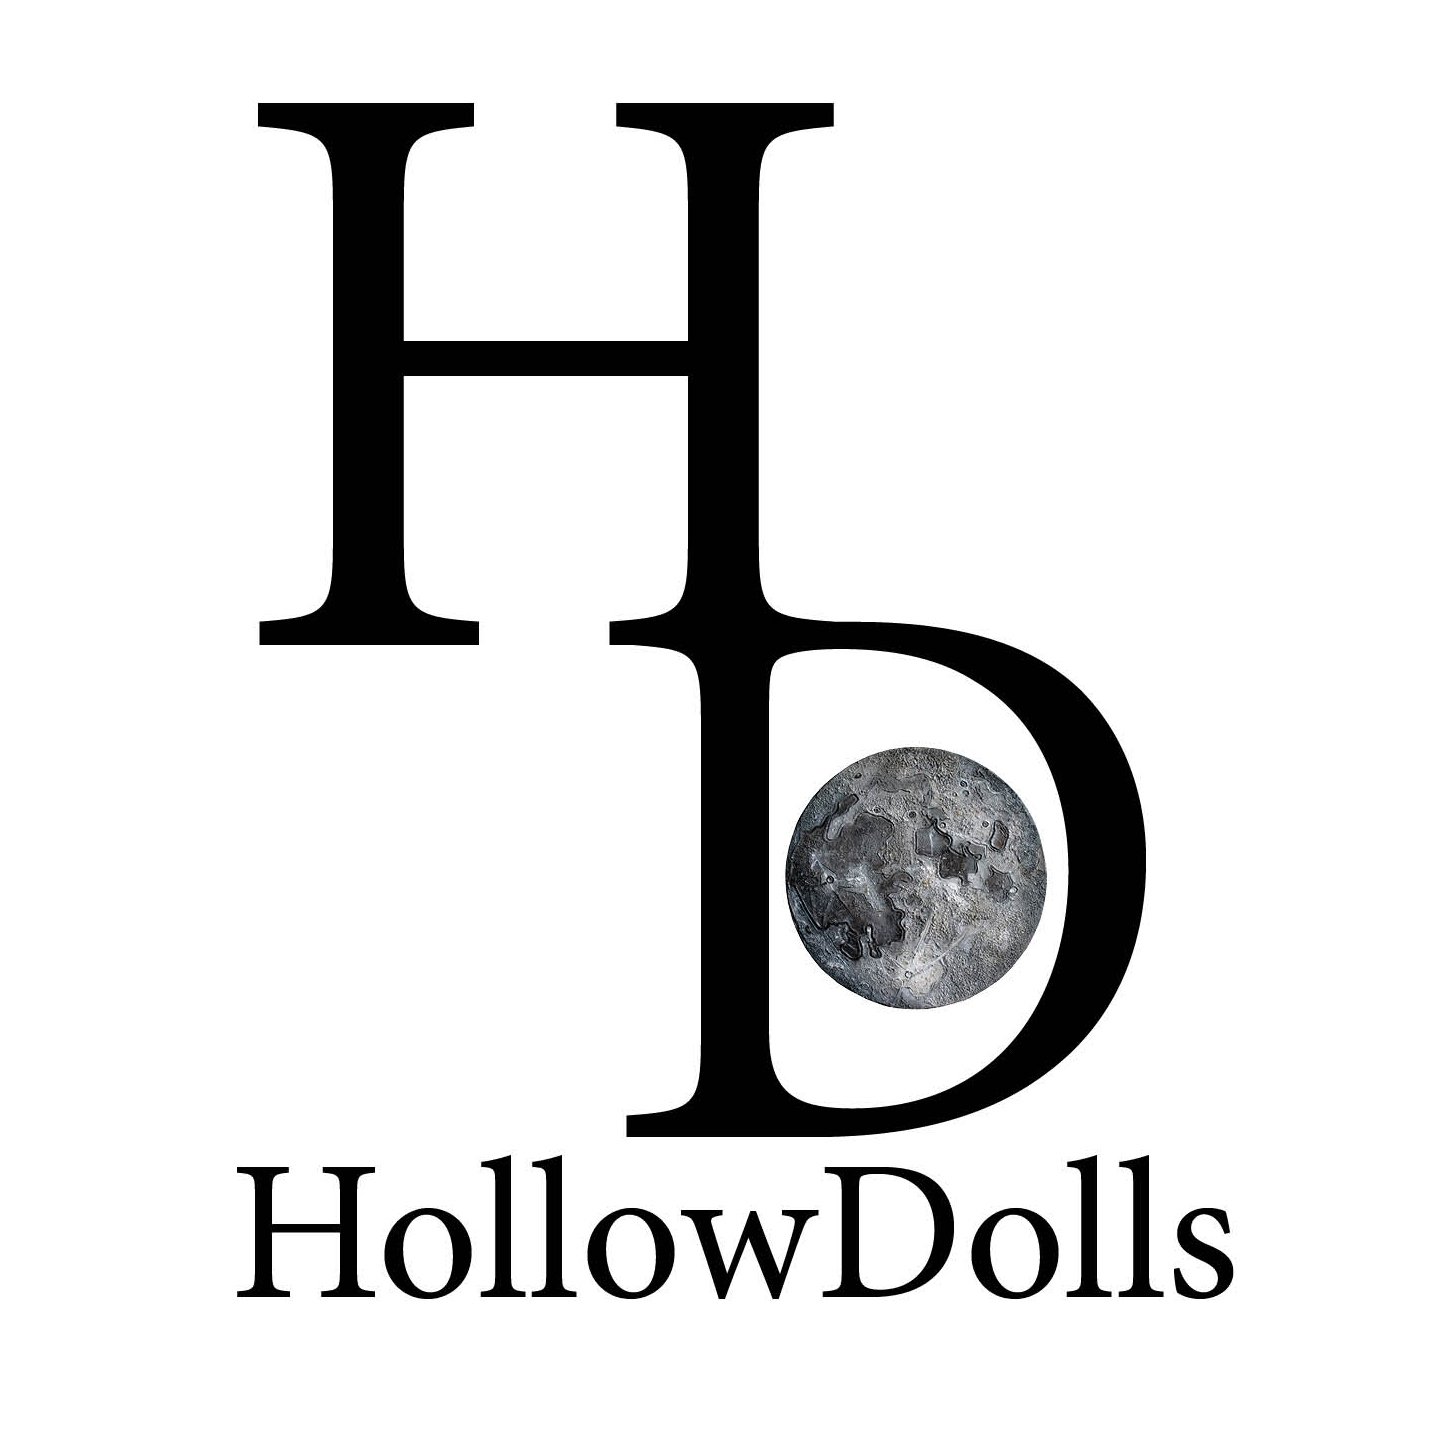 Hollowdolls